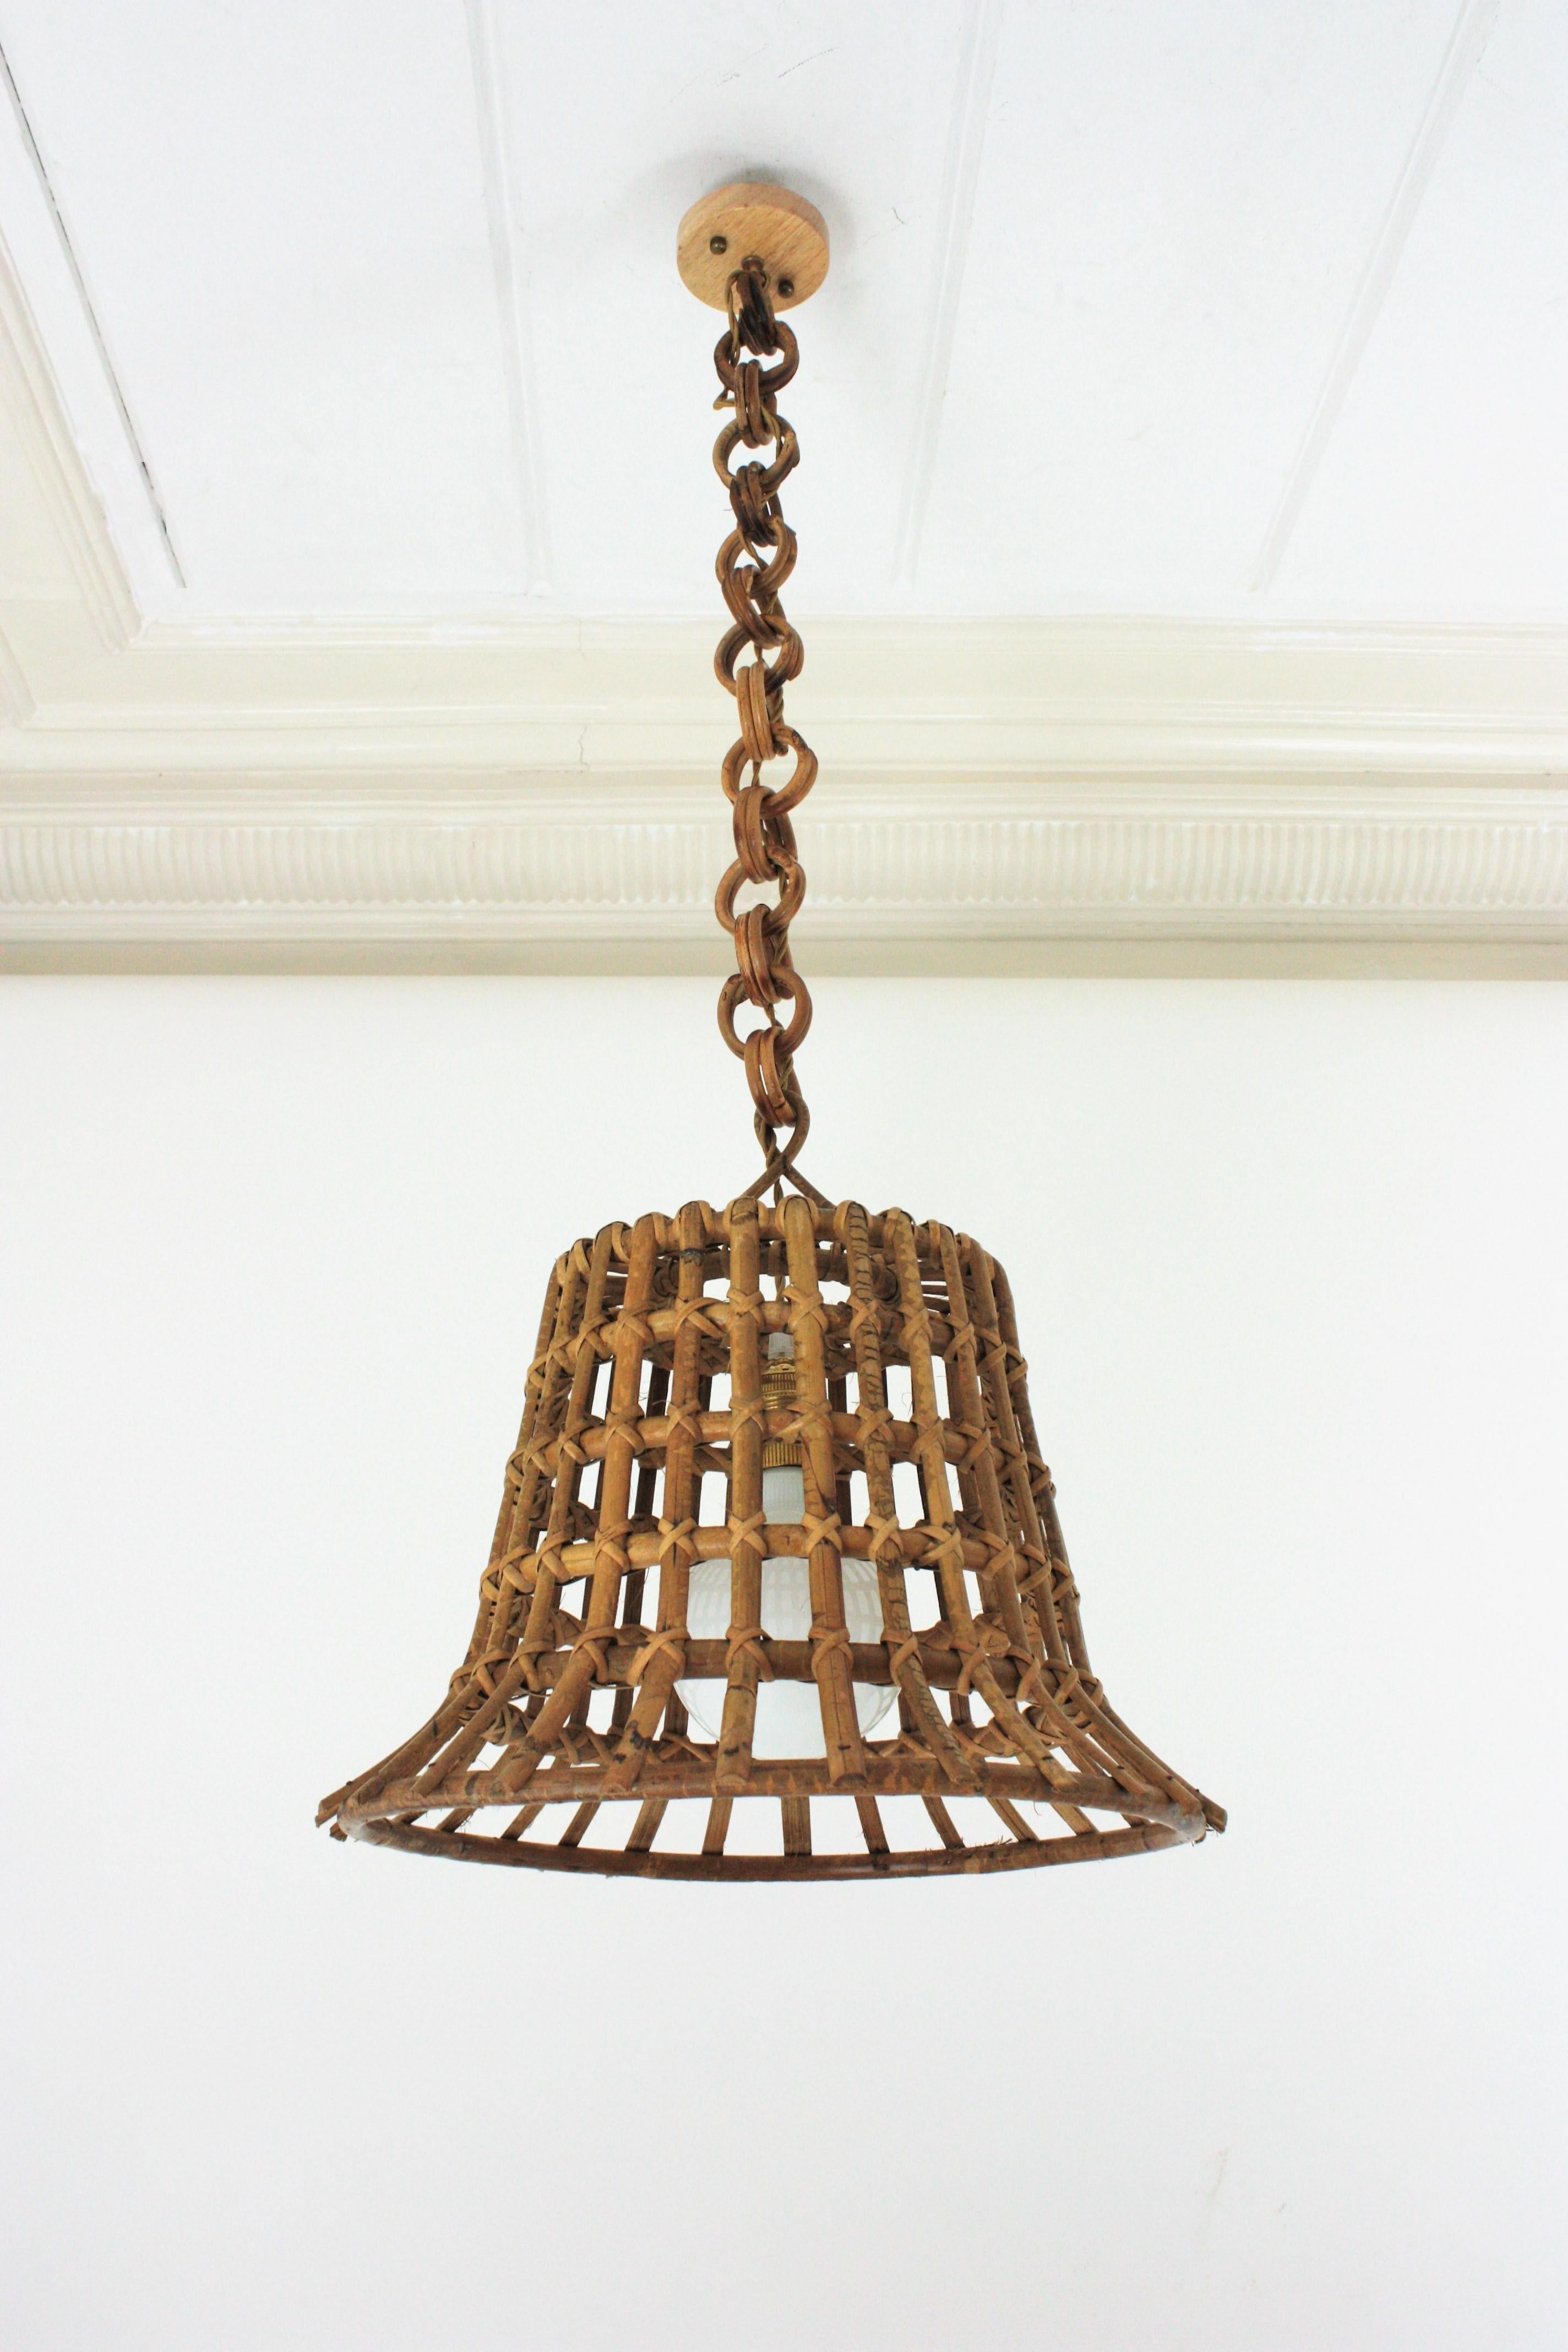 Large Rattan Grid Bell Pendant Light / Hanging Ceiling Lamp, France, 1960s For Sale 5